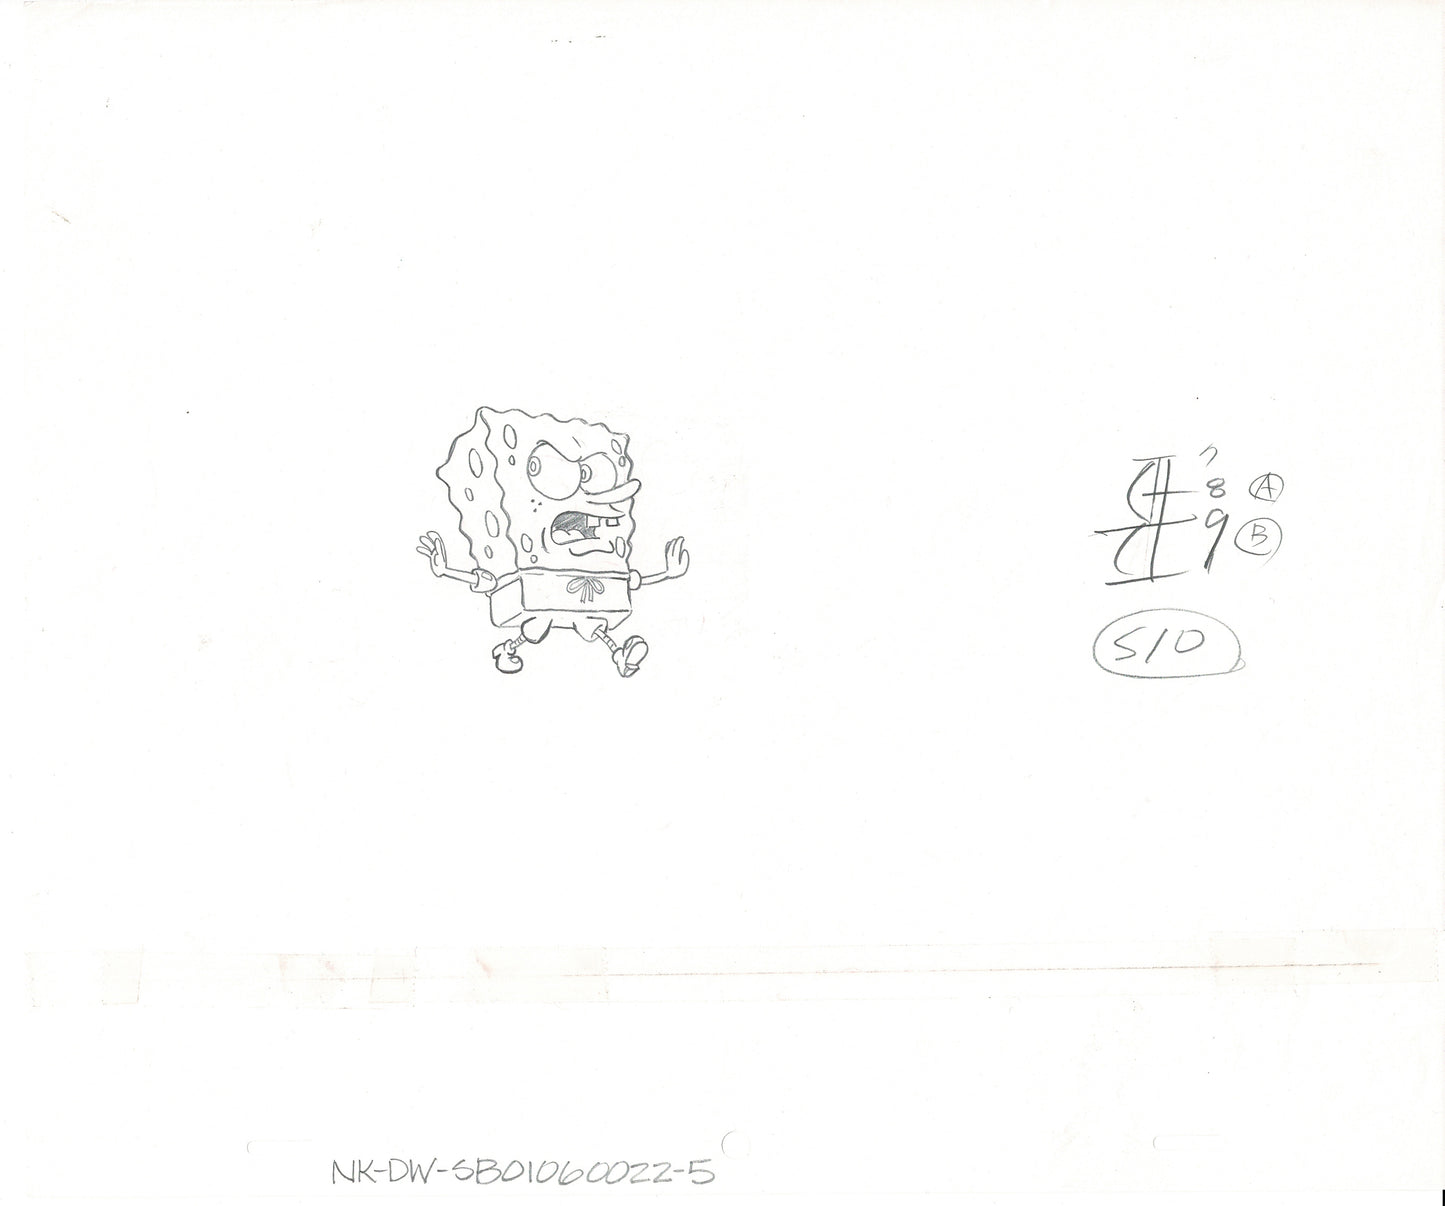 Spongebob Squarepants Production Animation Cel Drawing Nickelodeon 1999-2014 A-9